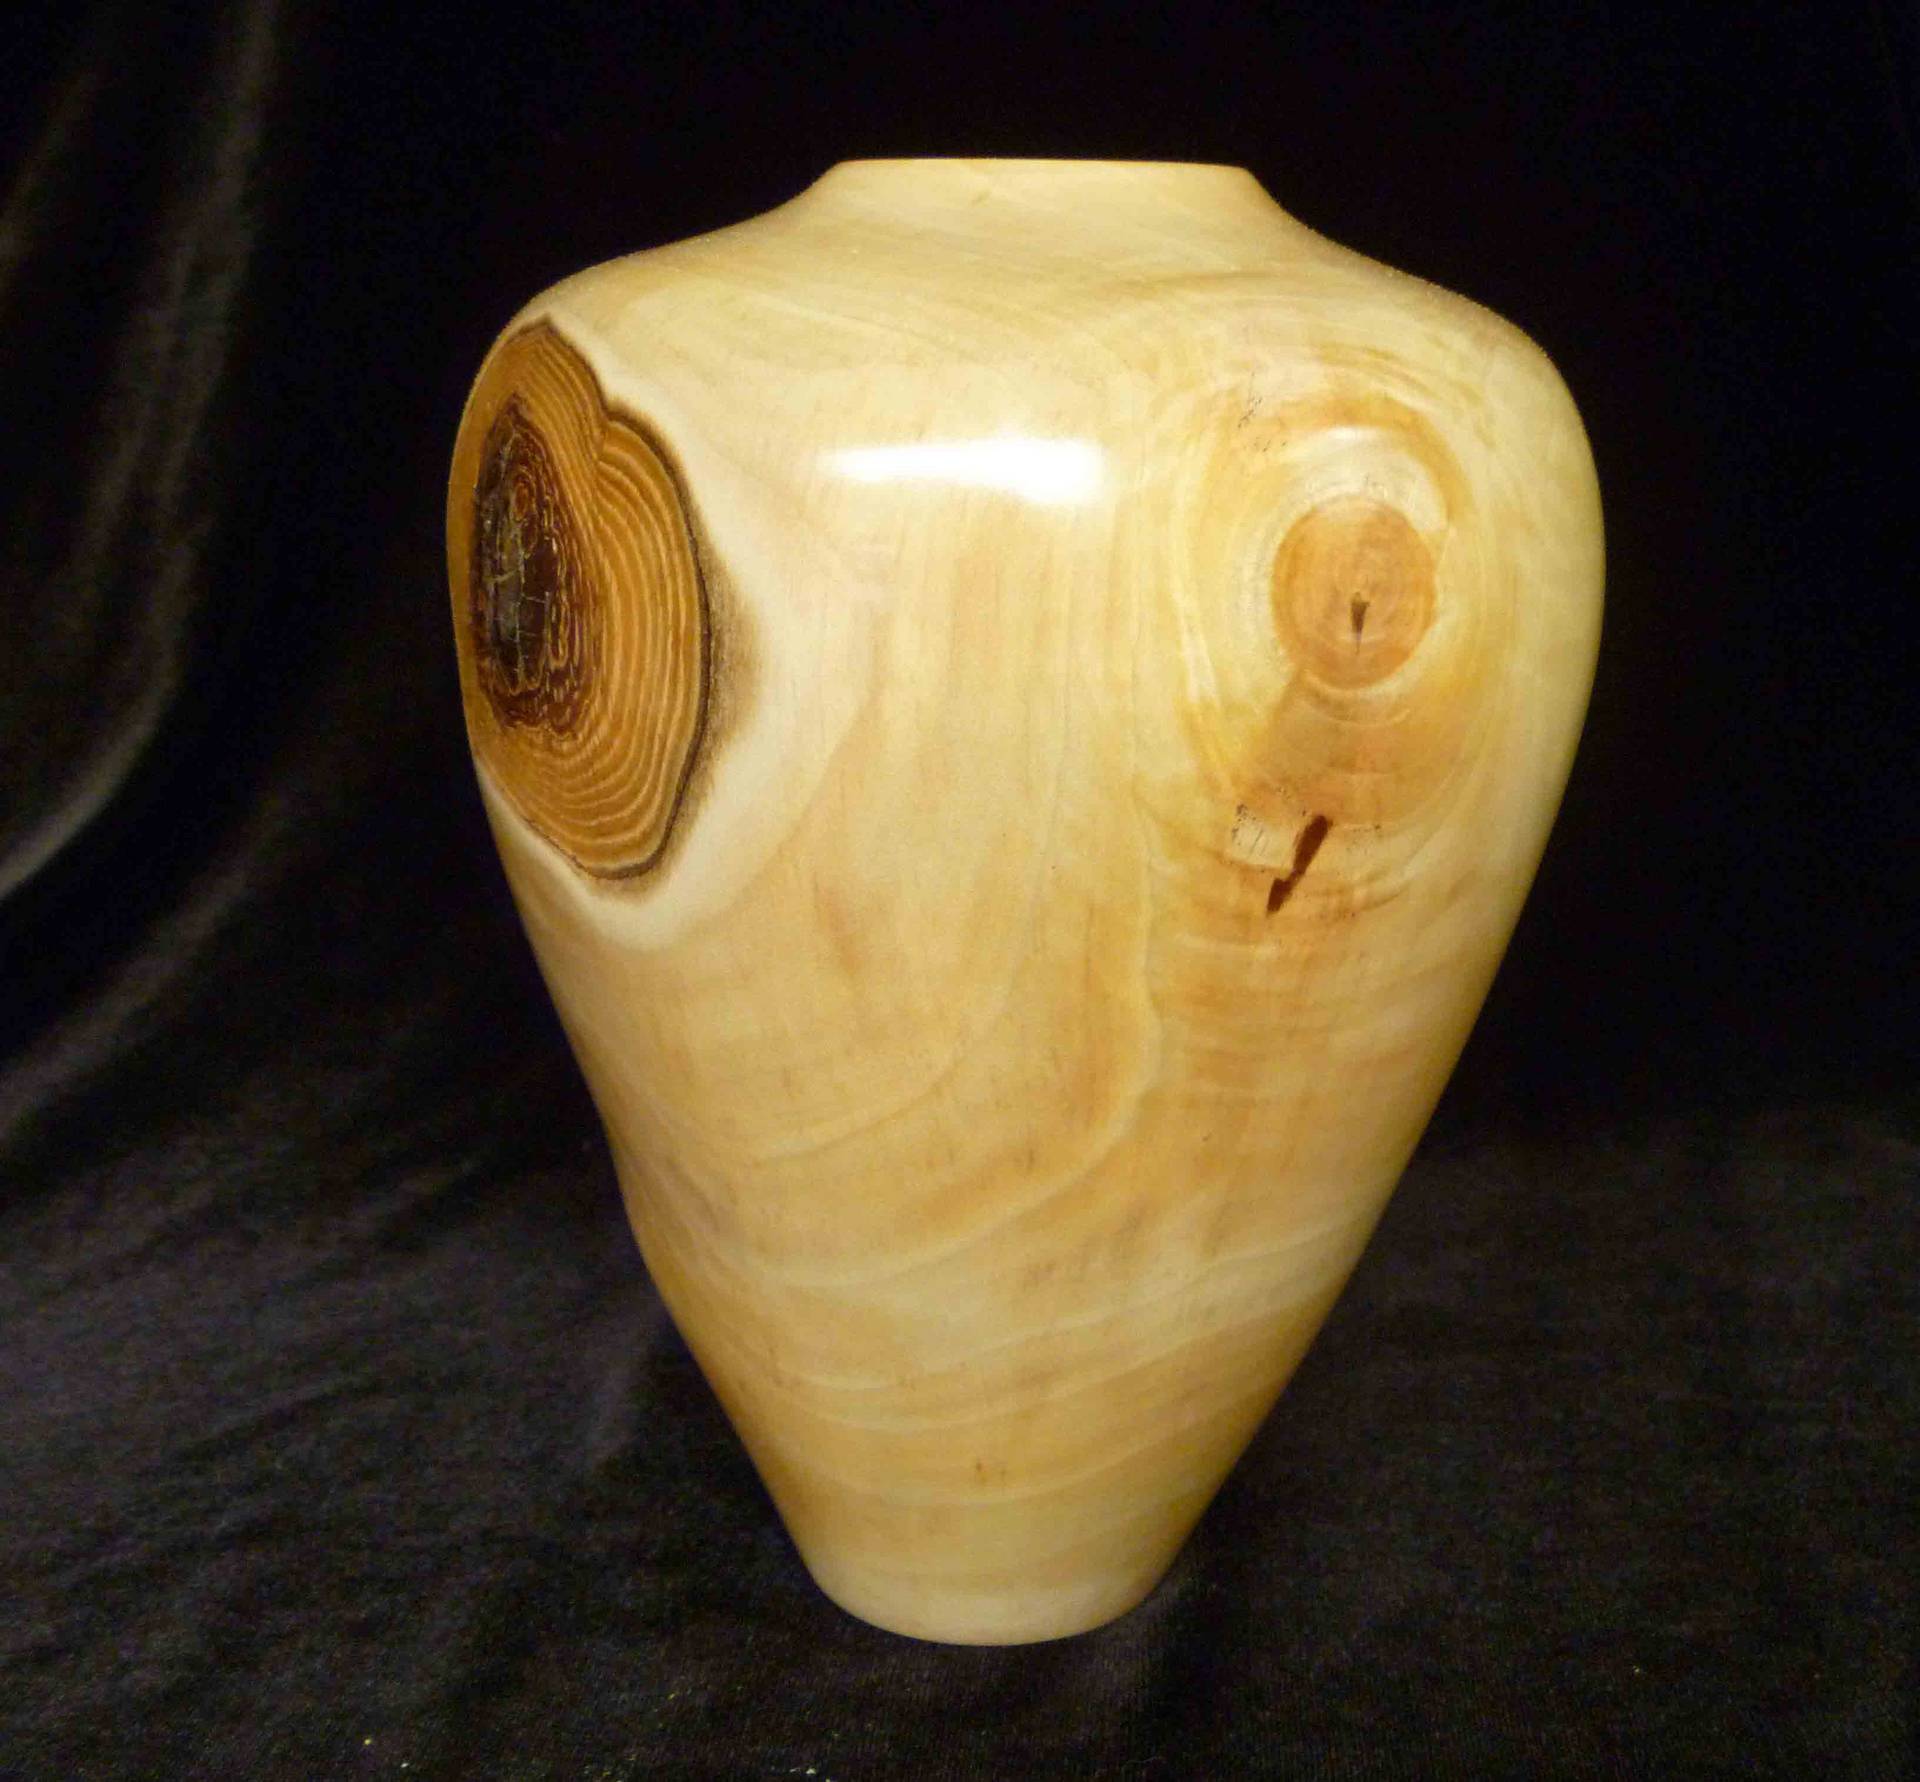 Bradford Pear vase